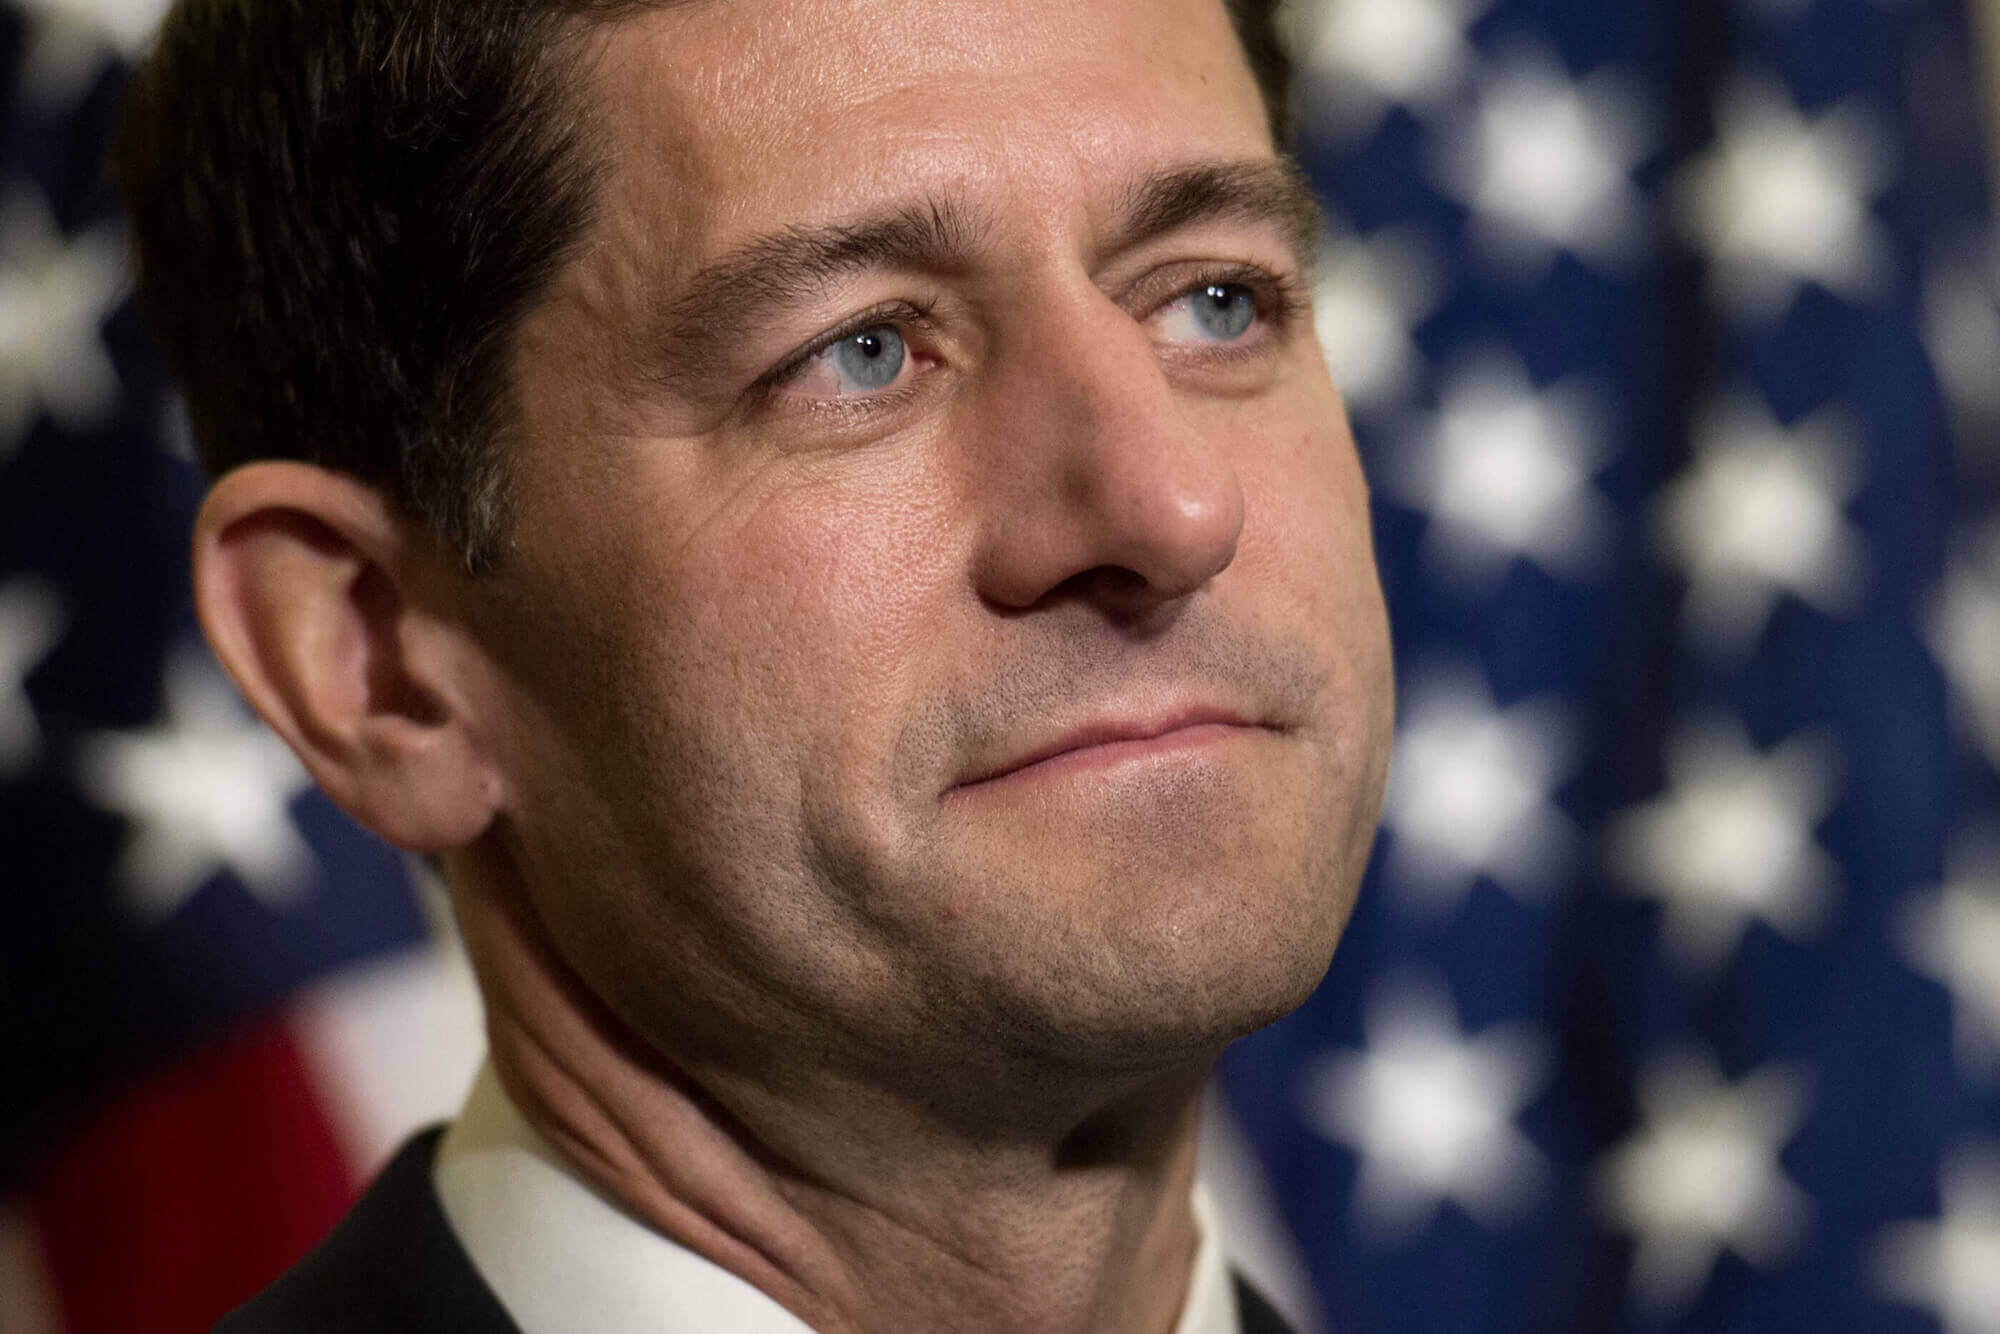 Image of Paul Ryan, close up